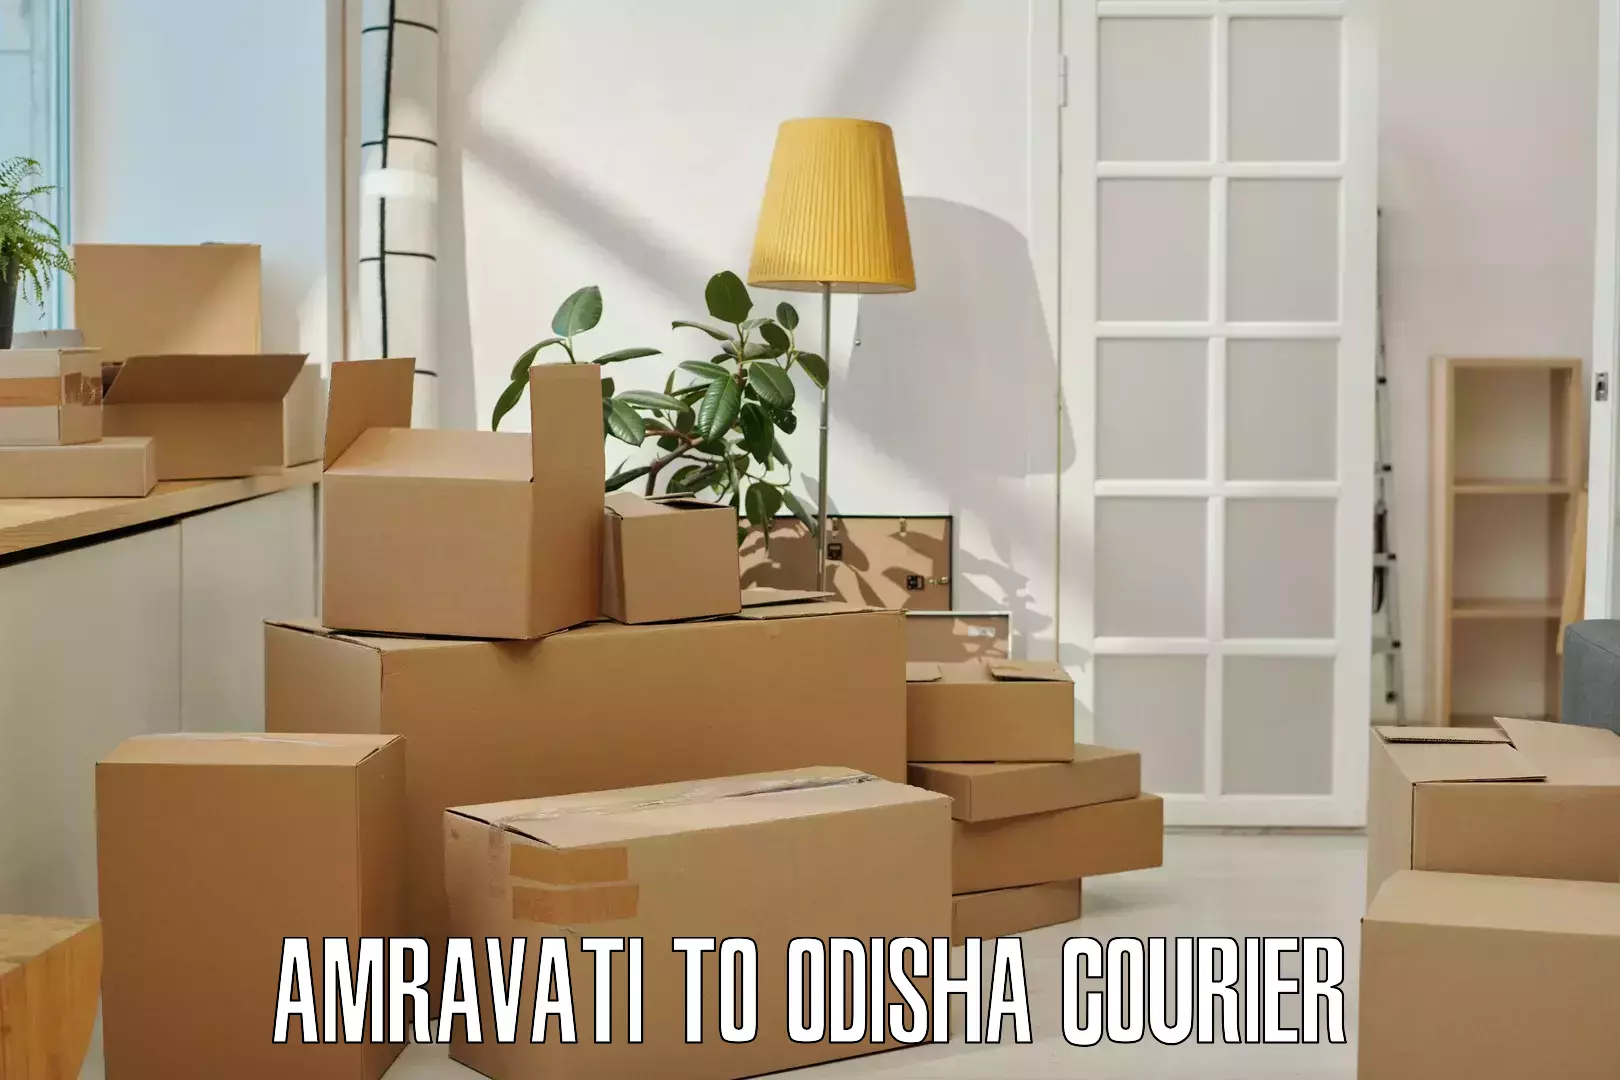 Courier service comparison Amravati to Loisingha